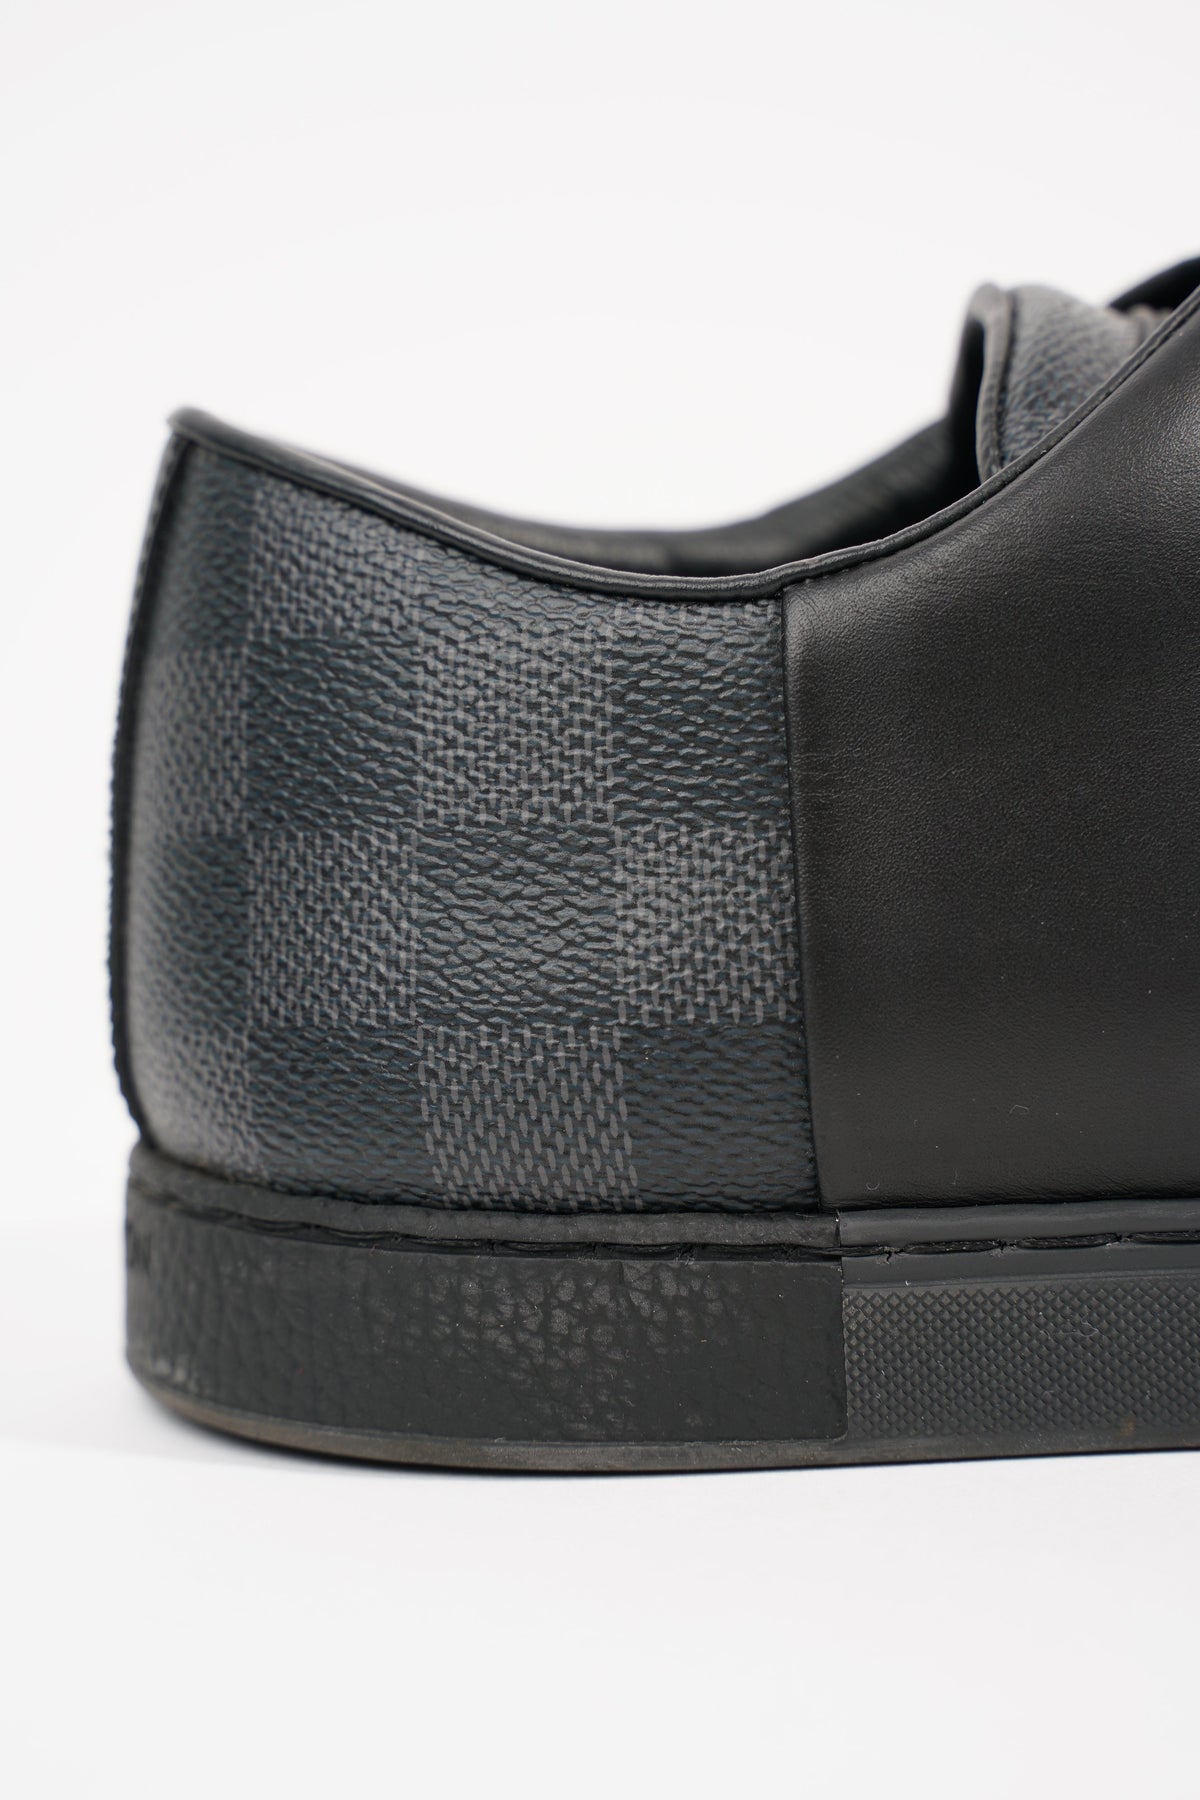 Louis Vuitton Sneakers Men Black Denmark, SAVE 36% 